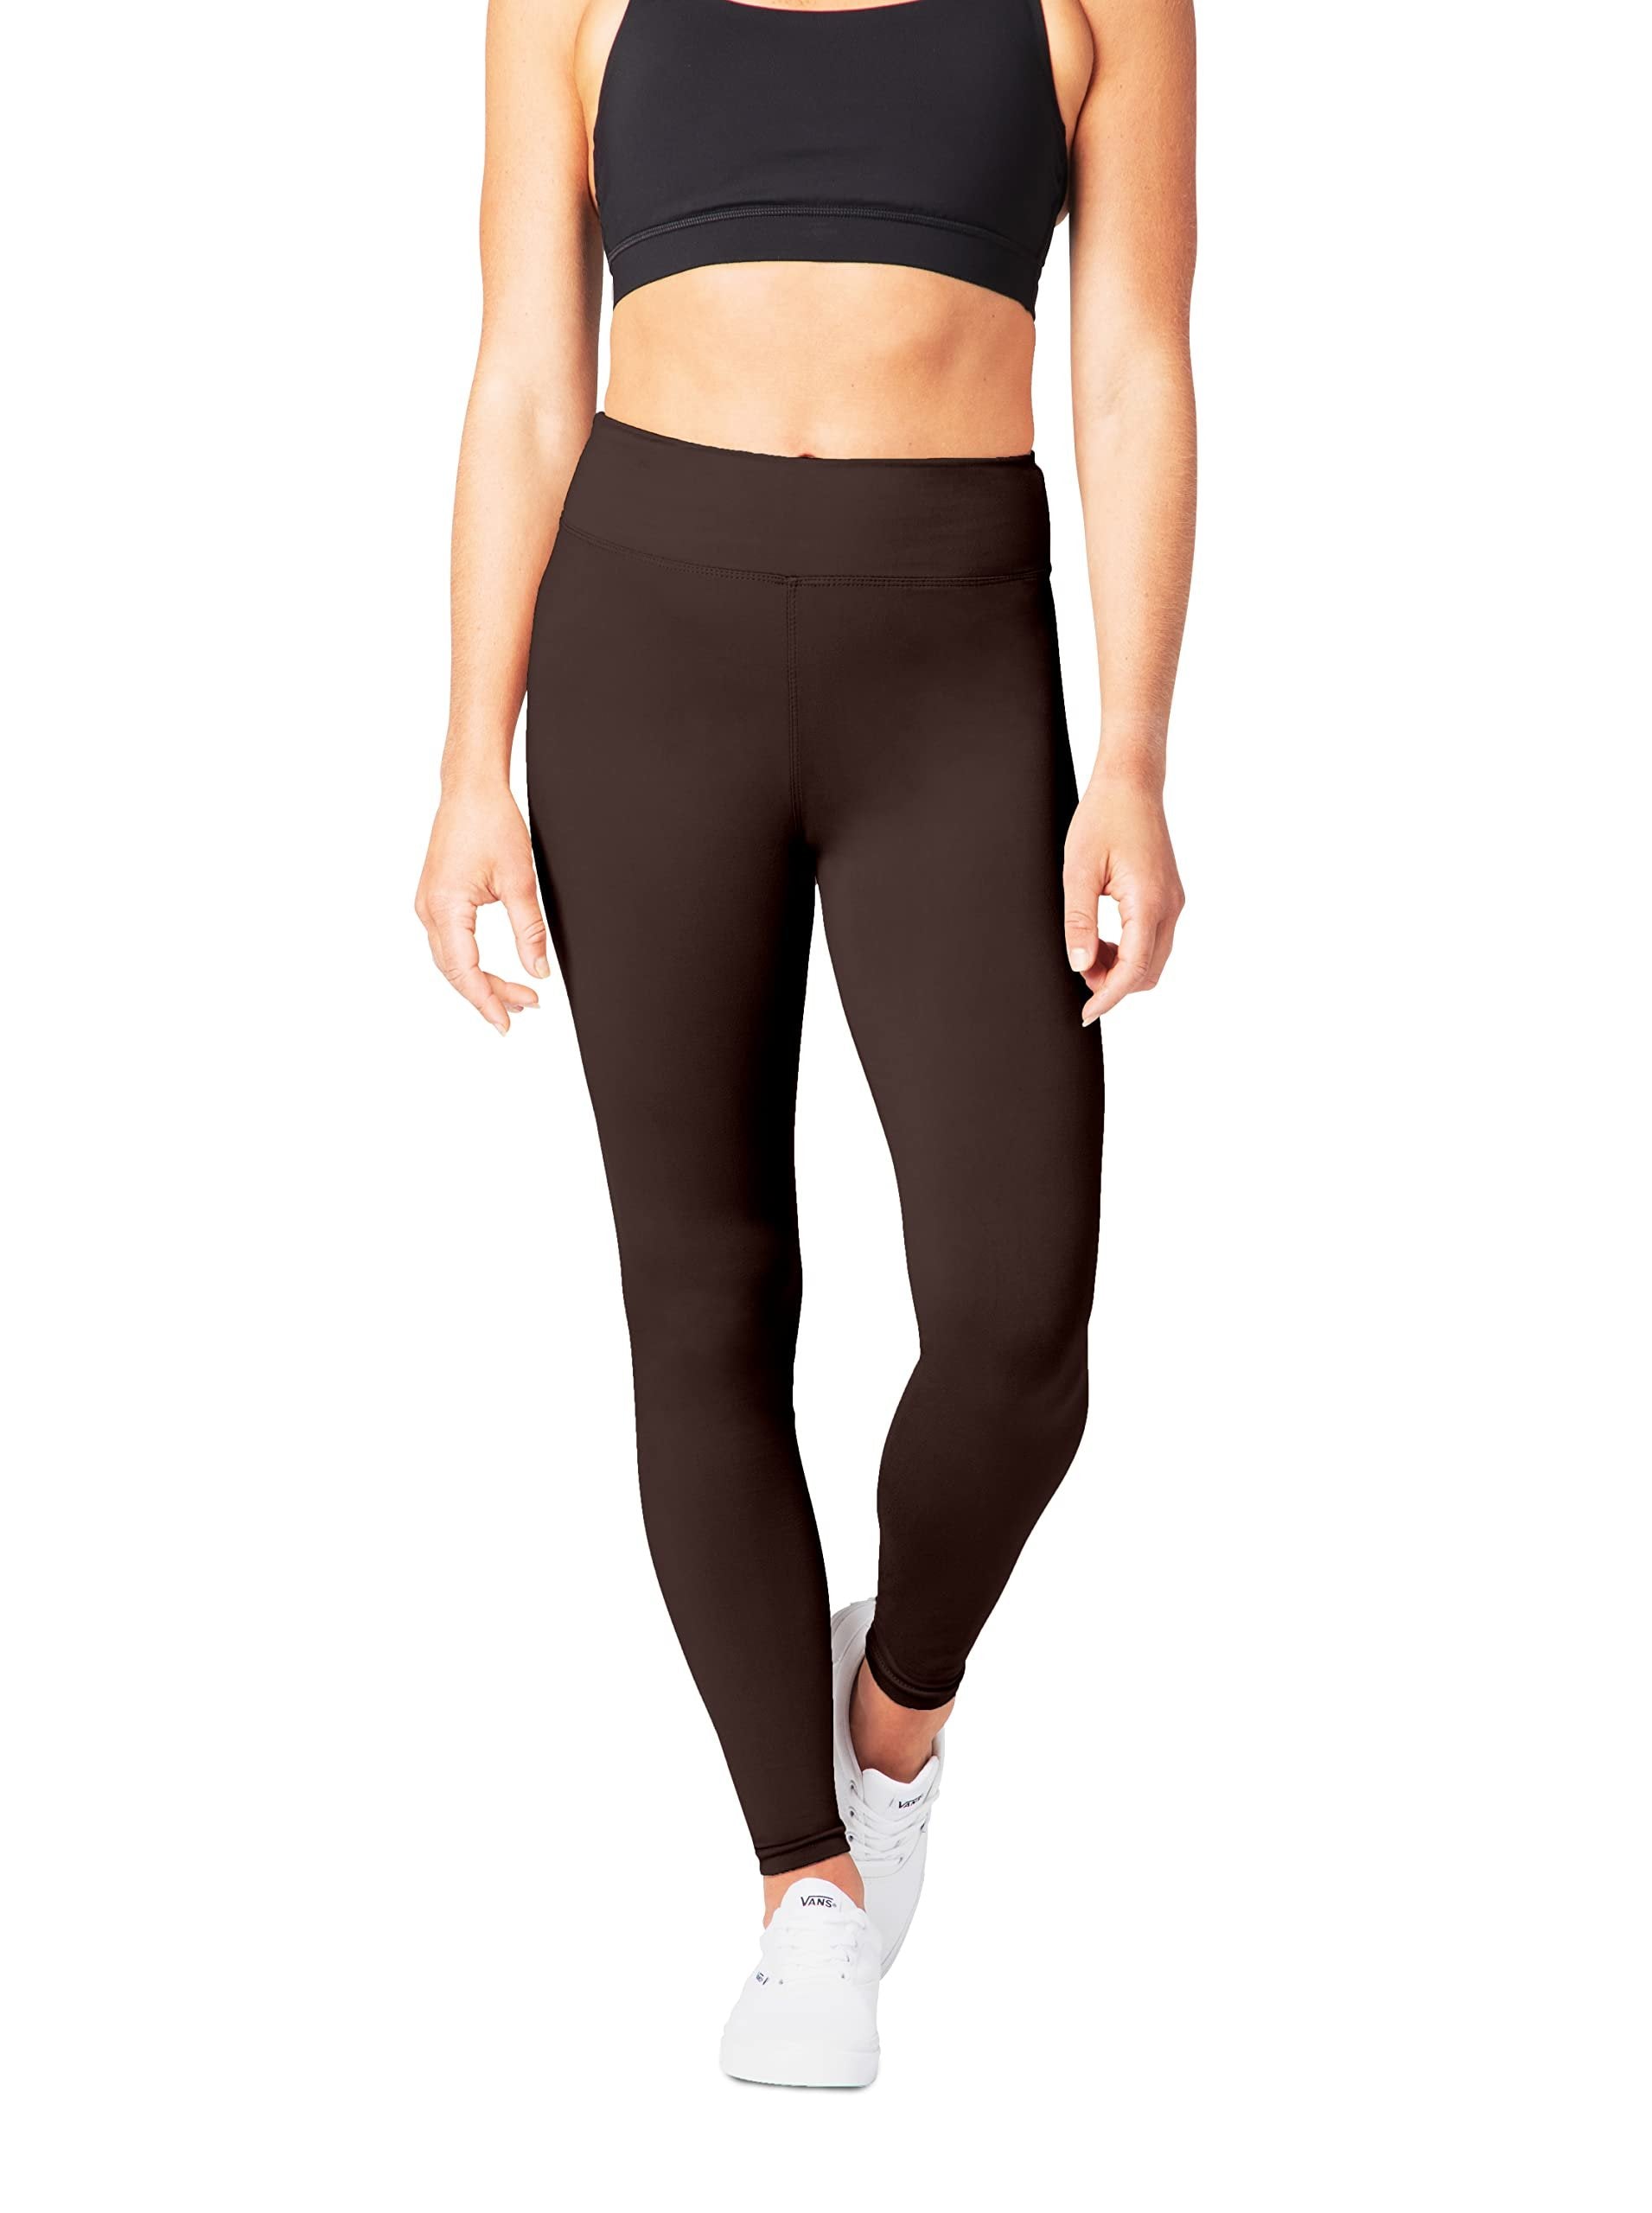 Brown Satina High Waisted Yoga Leggings for Women - Regular & Plus Sizes - 3 Waistband - Free Shipping